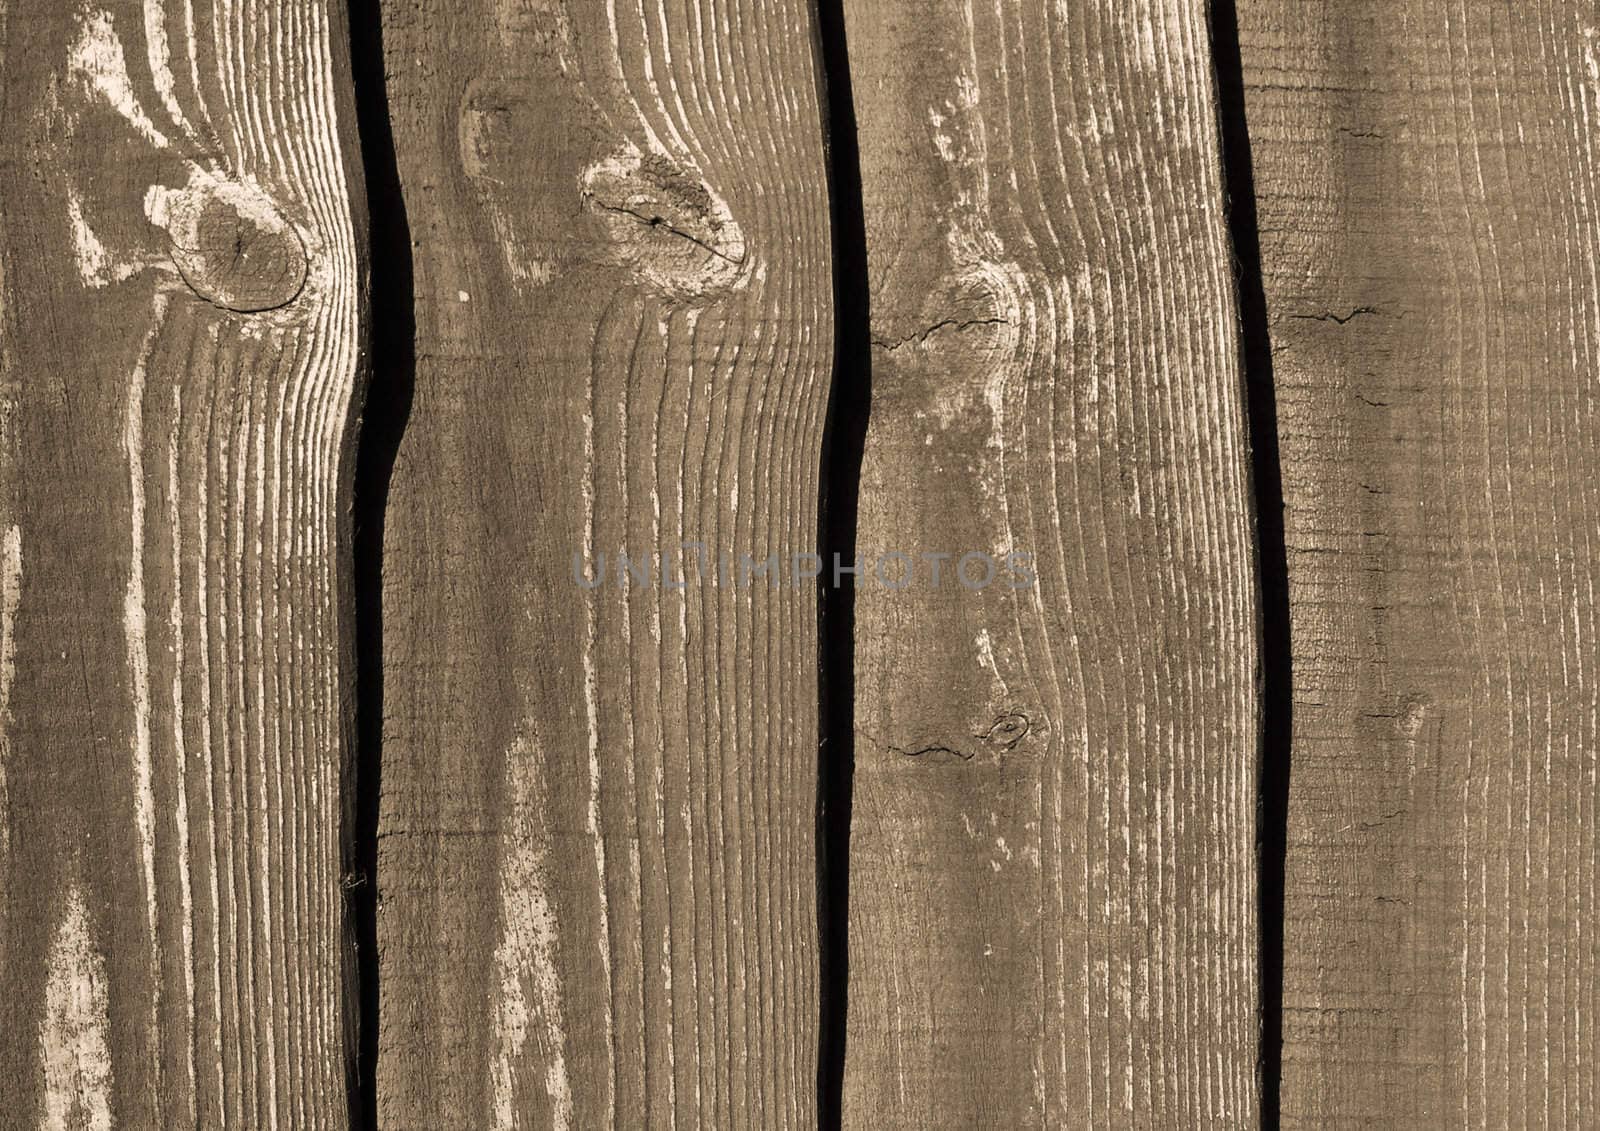 Grunge style wood texture